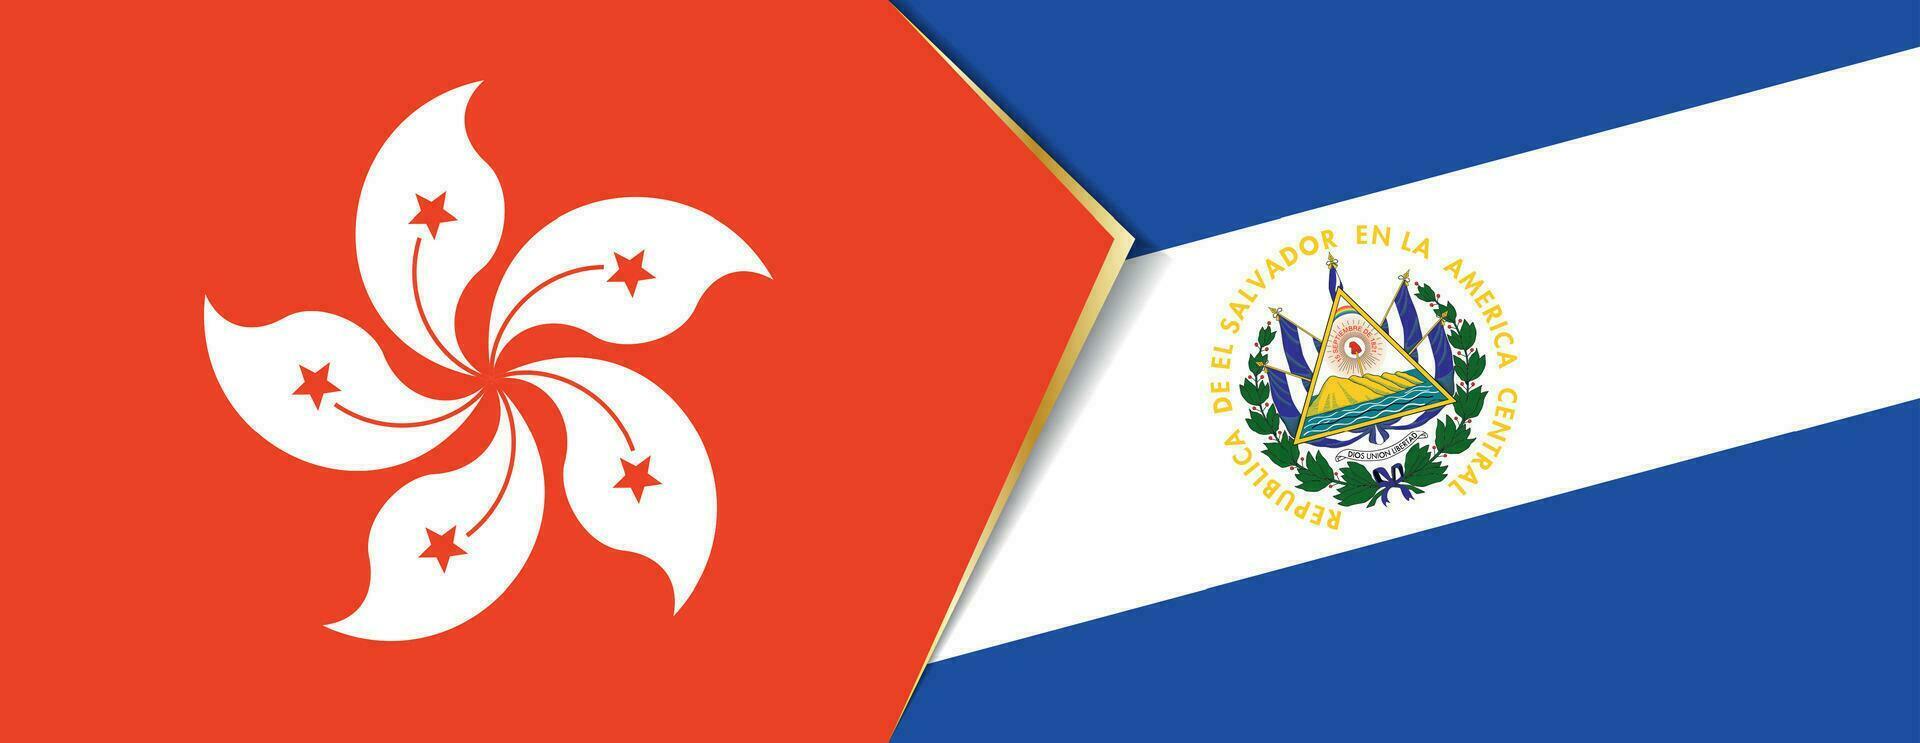 hong Kong en el Salvador vlaggen, twee vector vlaggen.